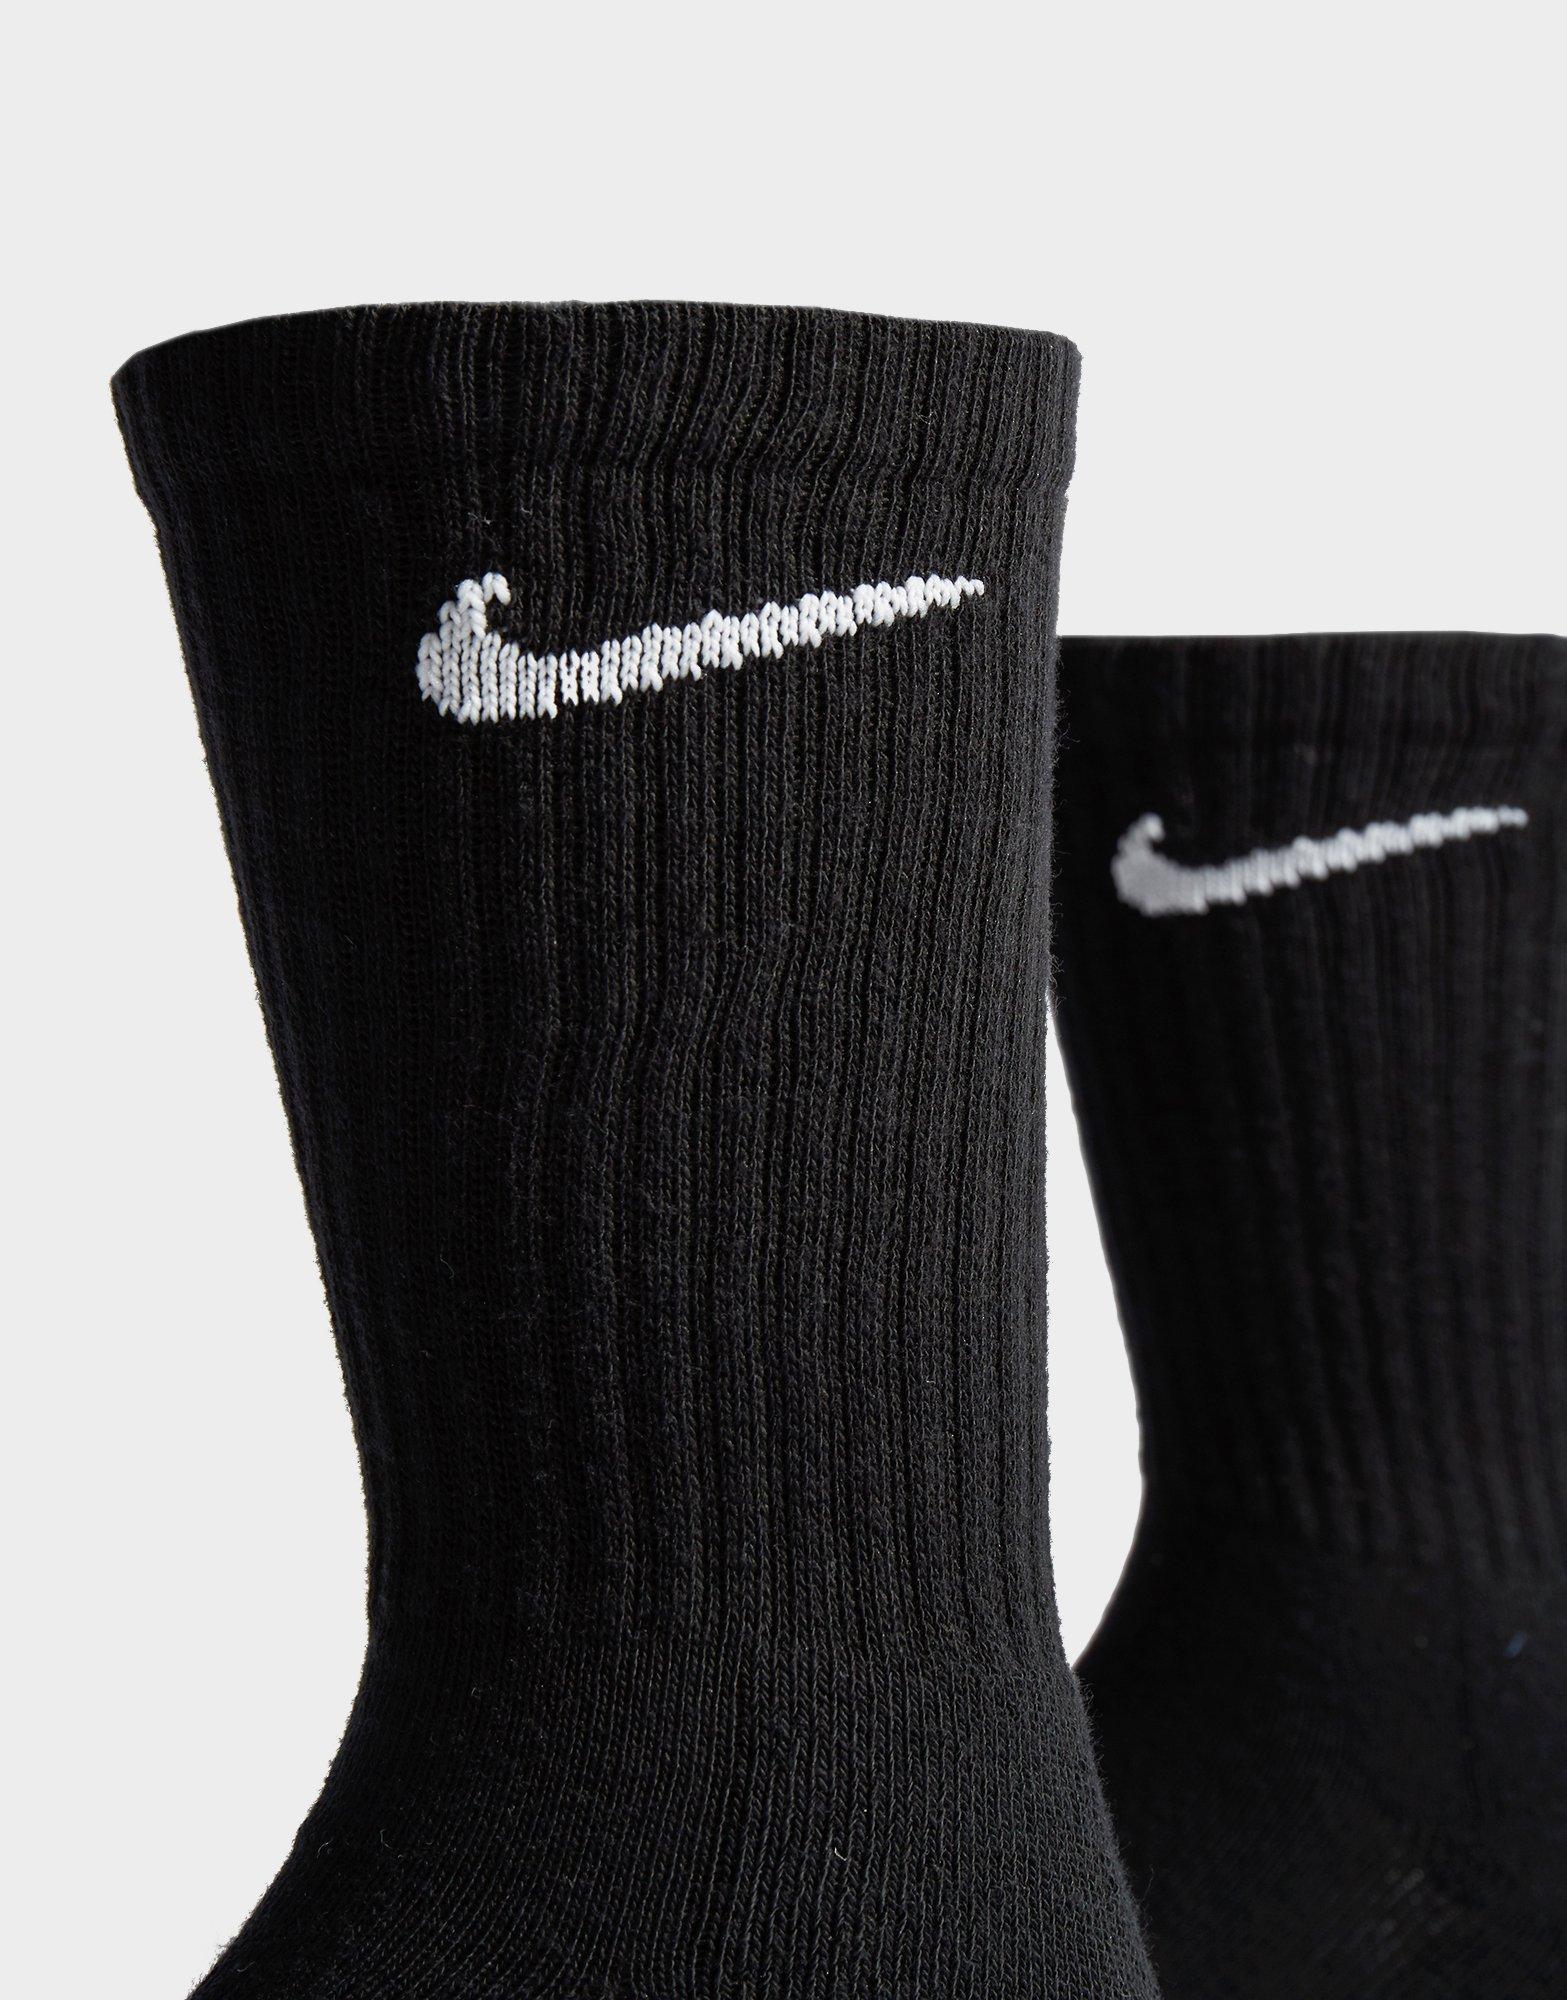 long black socks nike